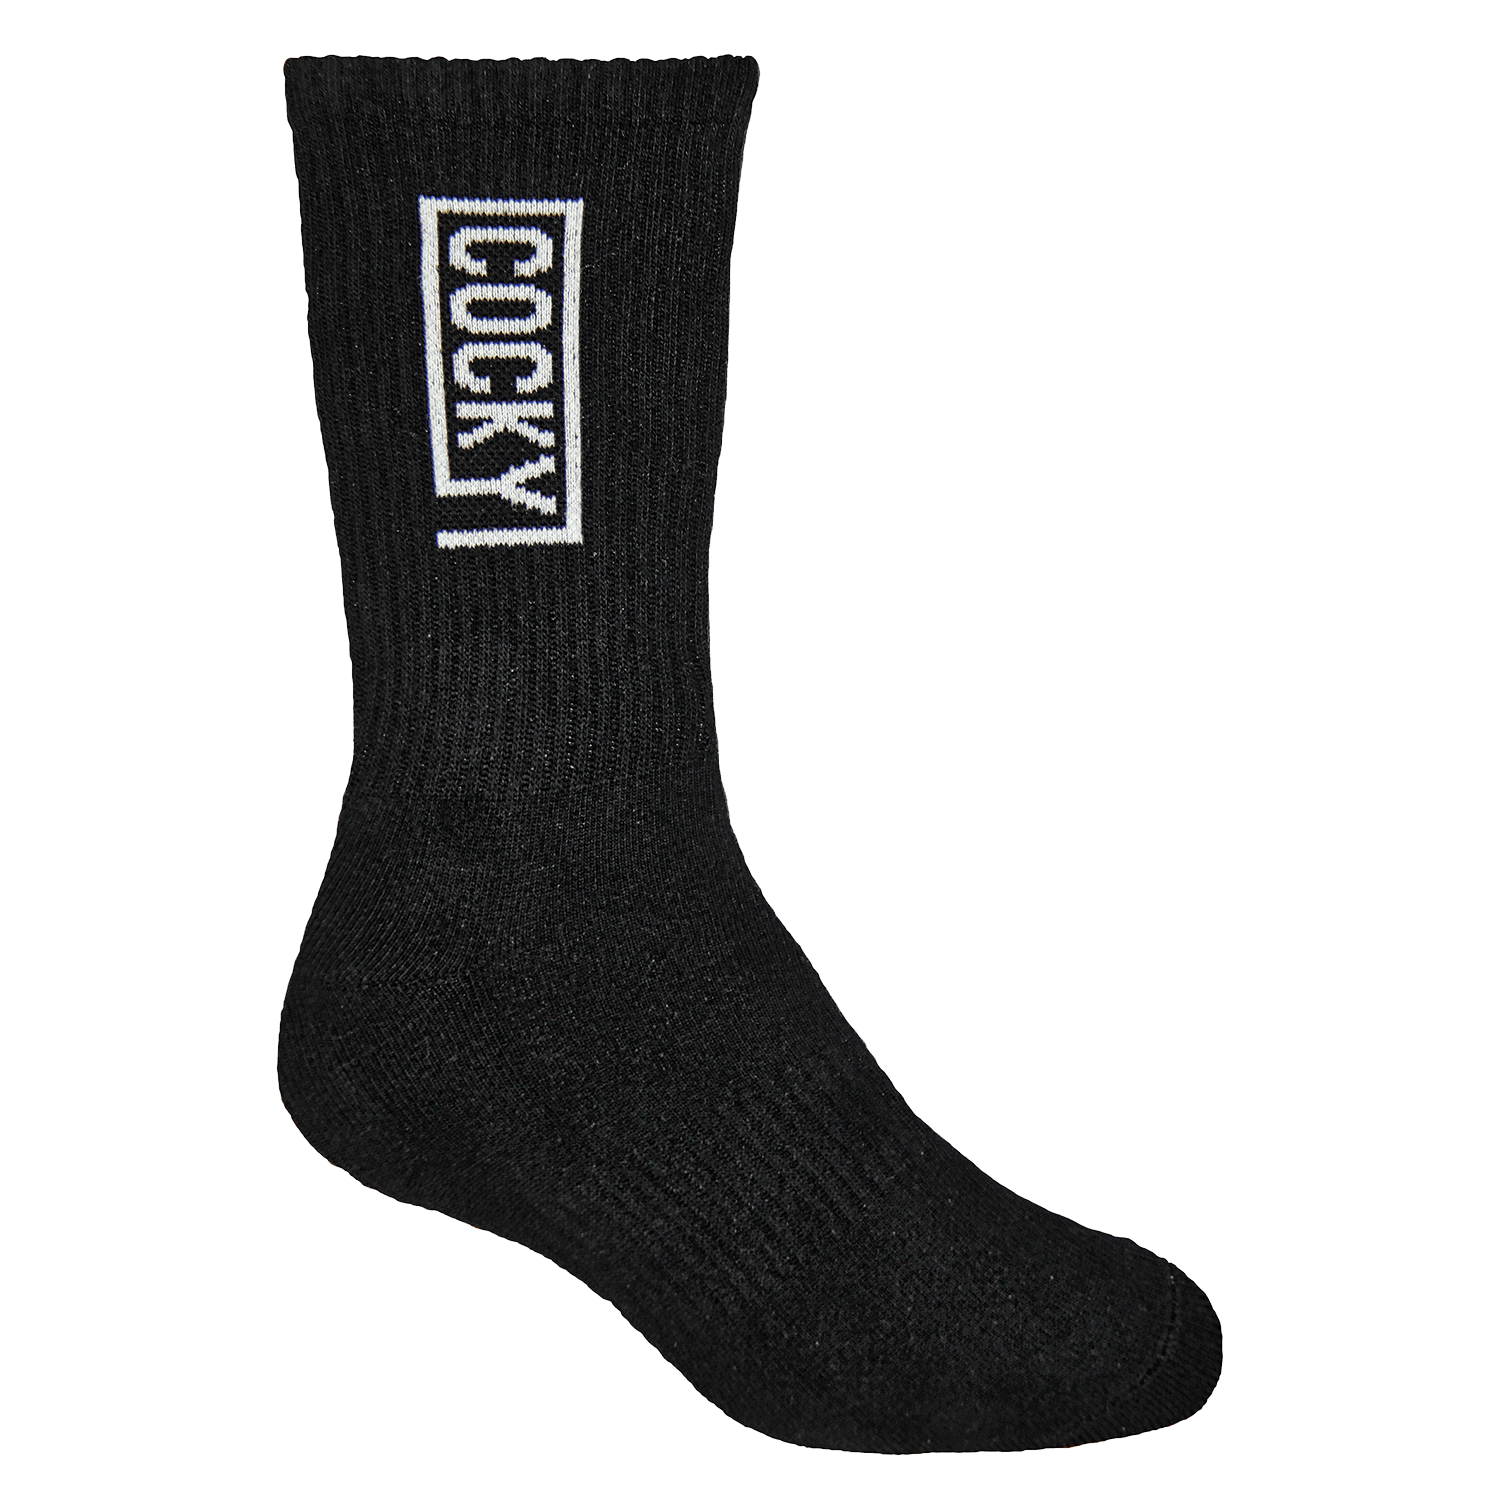 Cocky Socks 2 Packet